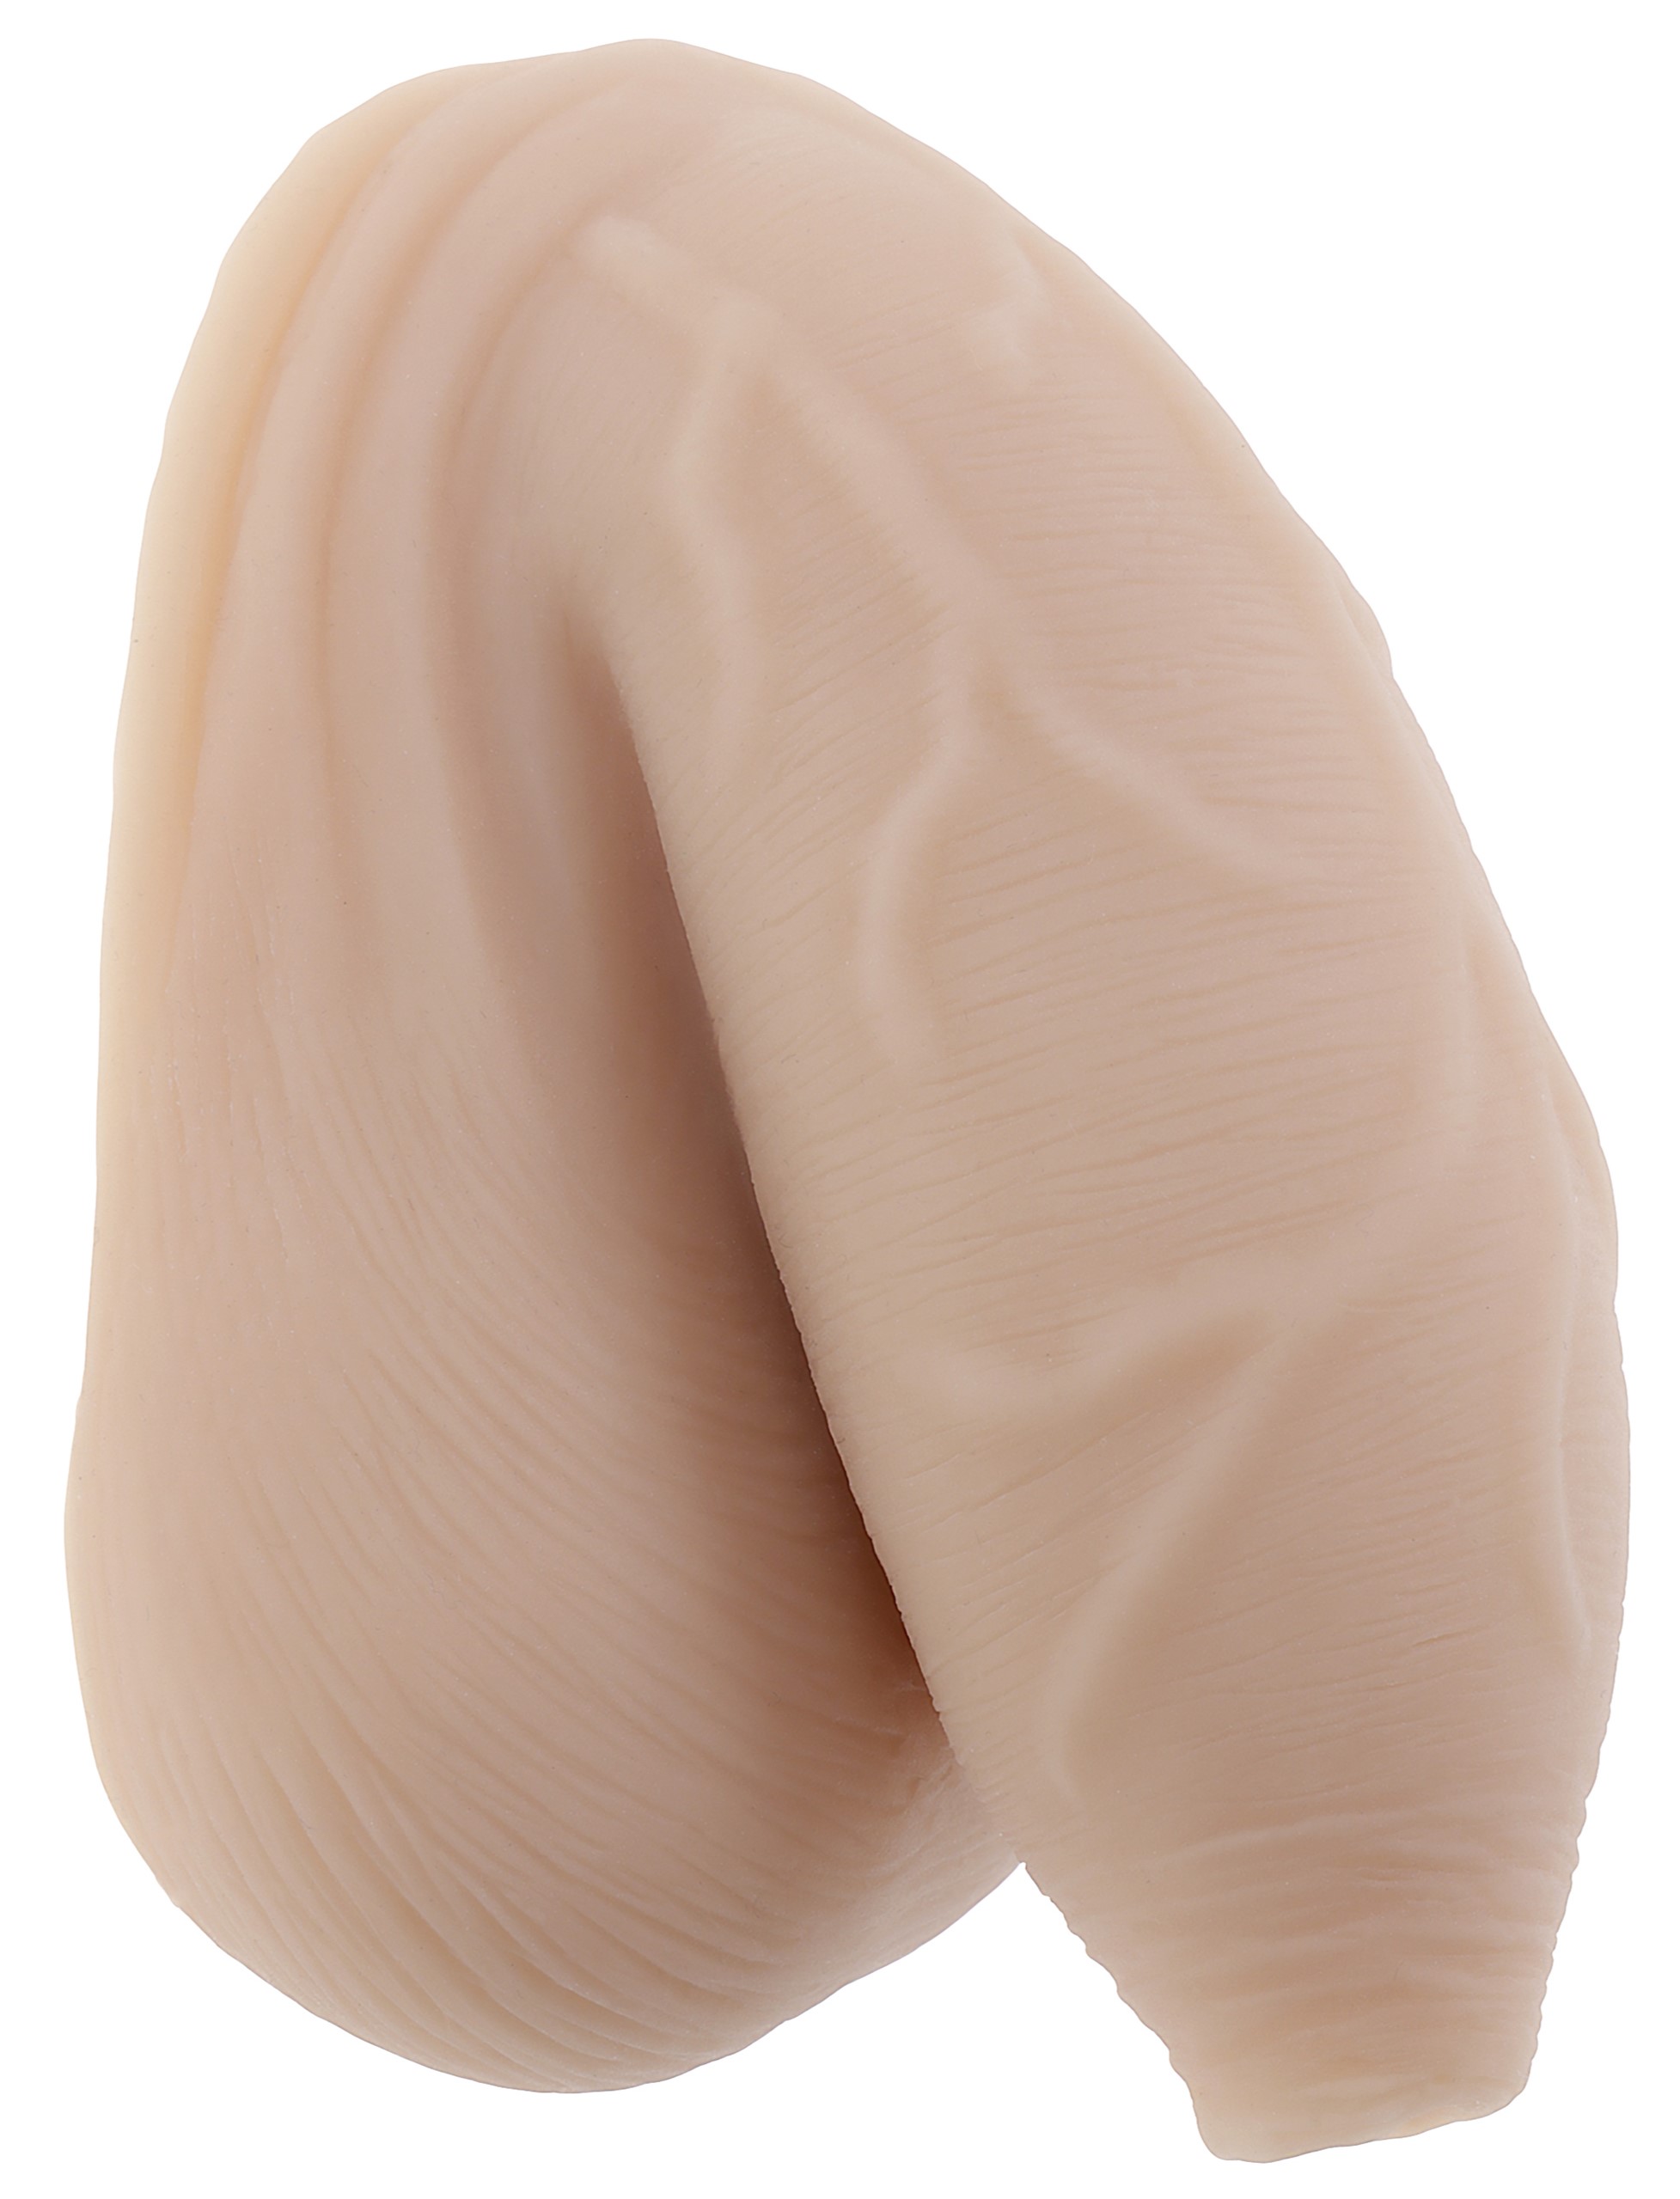 Penis Packer Uncircumcised Gender X, TPE, Light Natural